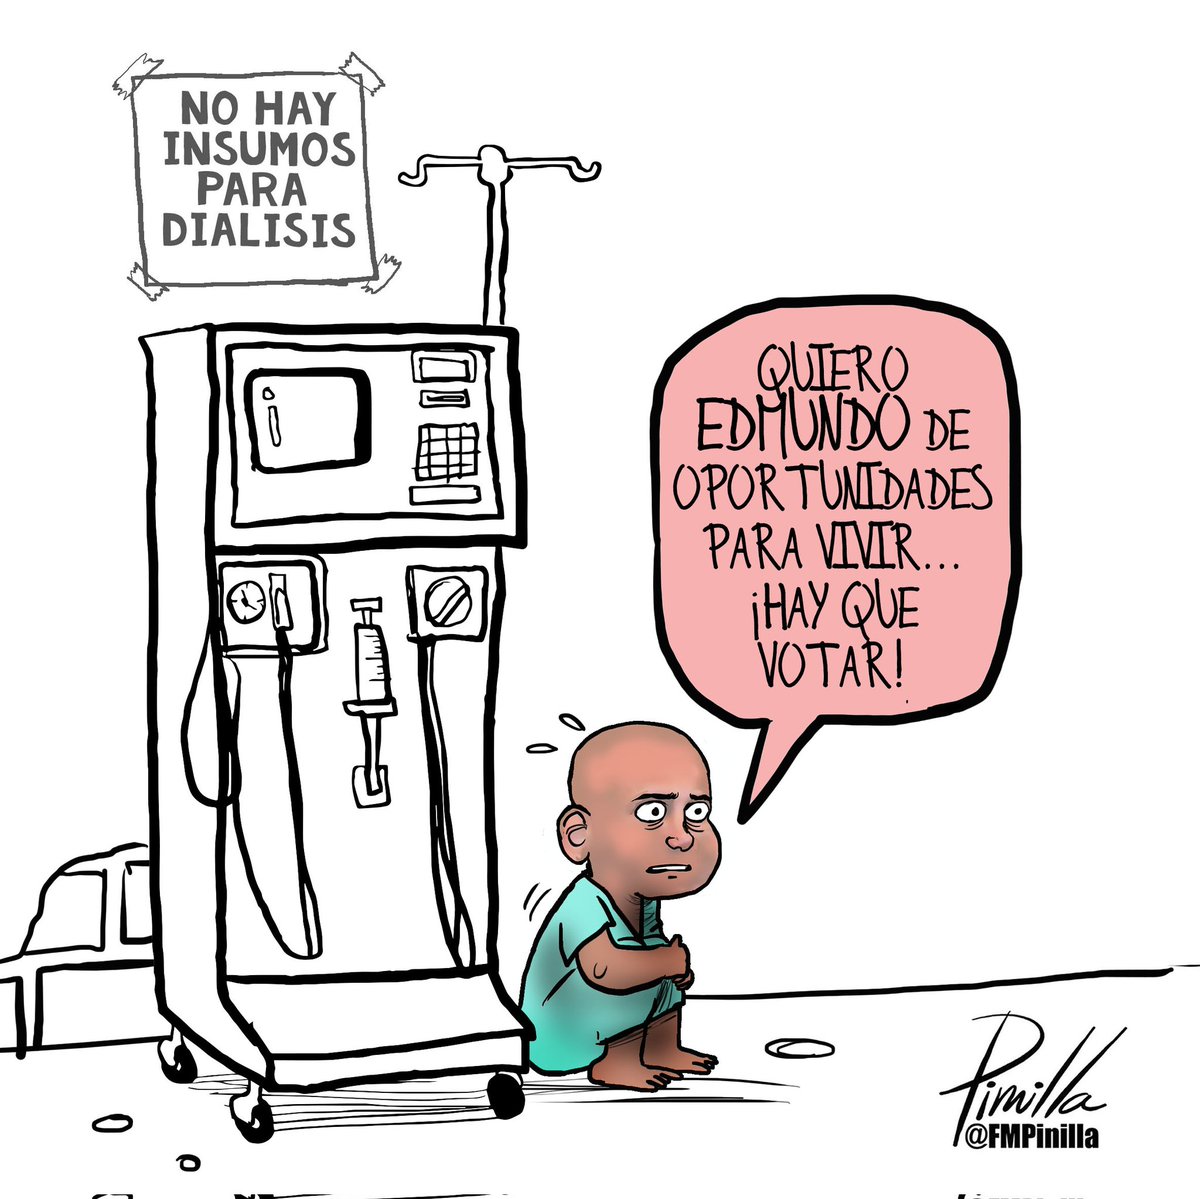 Edmundo de oportunidades para vivir...
•
#Caricatura para @elnacionalweb 
•
#Caricatura #Cartoon #Venezuela #venezolanos #politicalcartoon